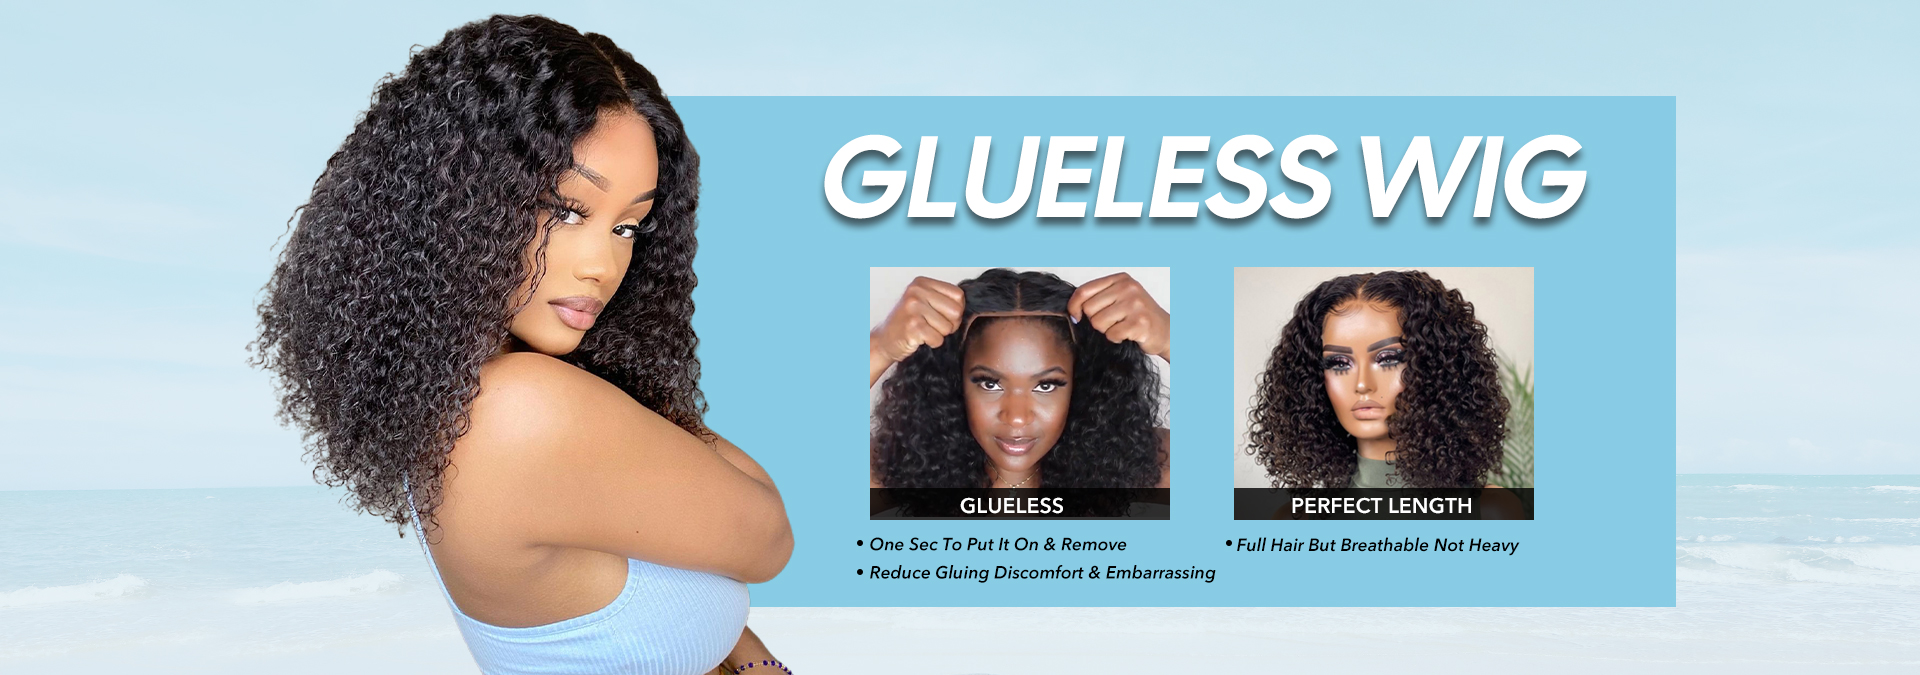 glueless wig summer sale pc